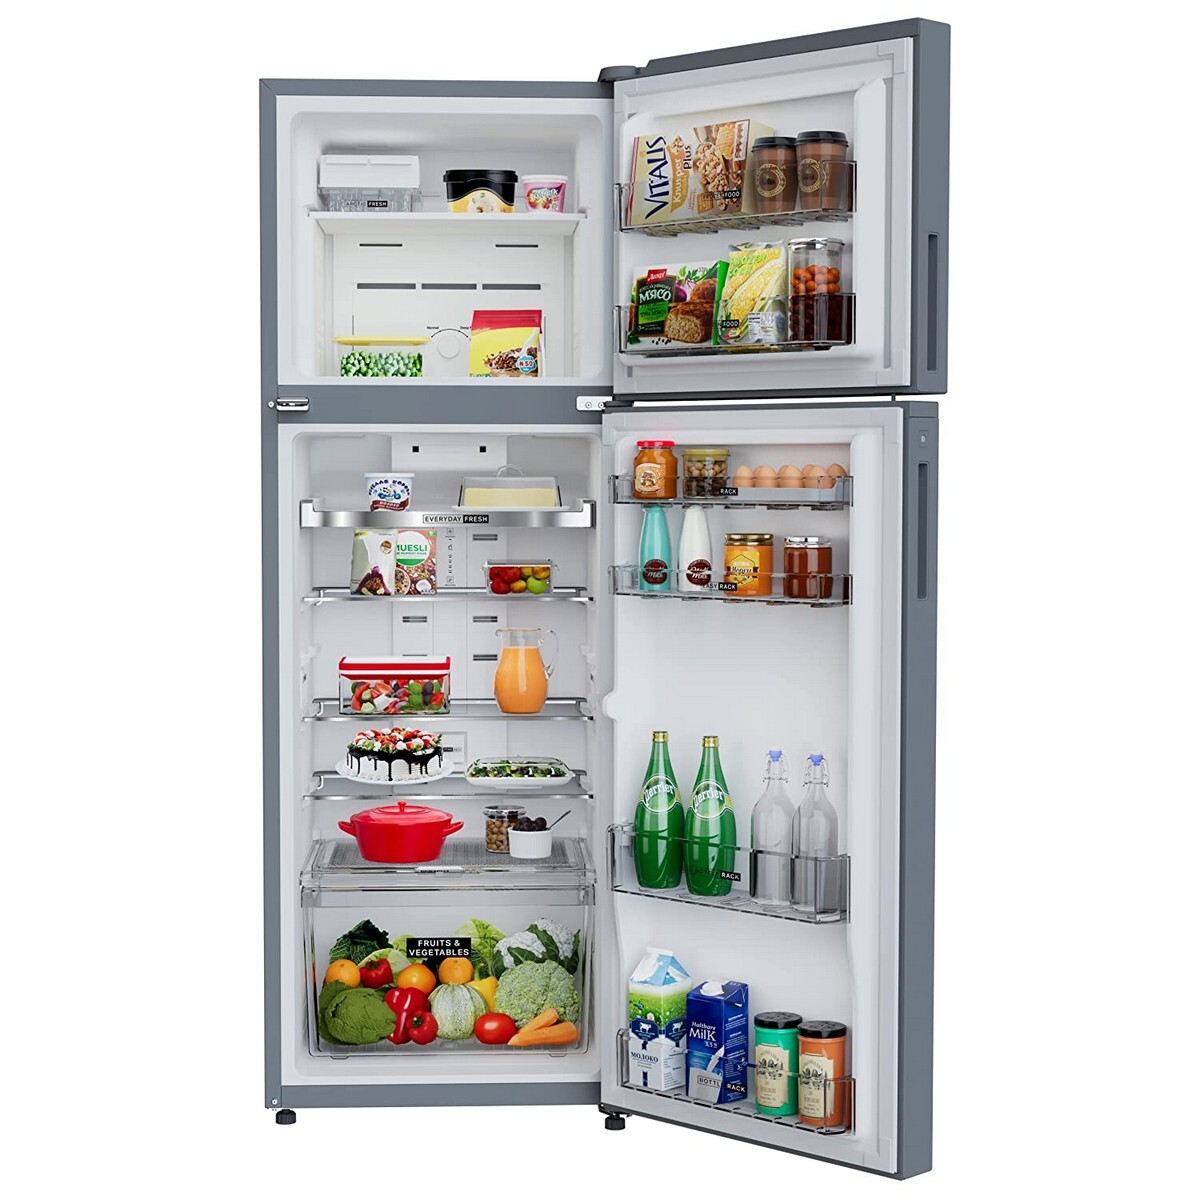 Whirlpool Refrigerator Frost Free Cnv 305 Illusia Steel 259L